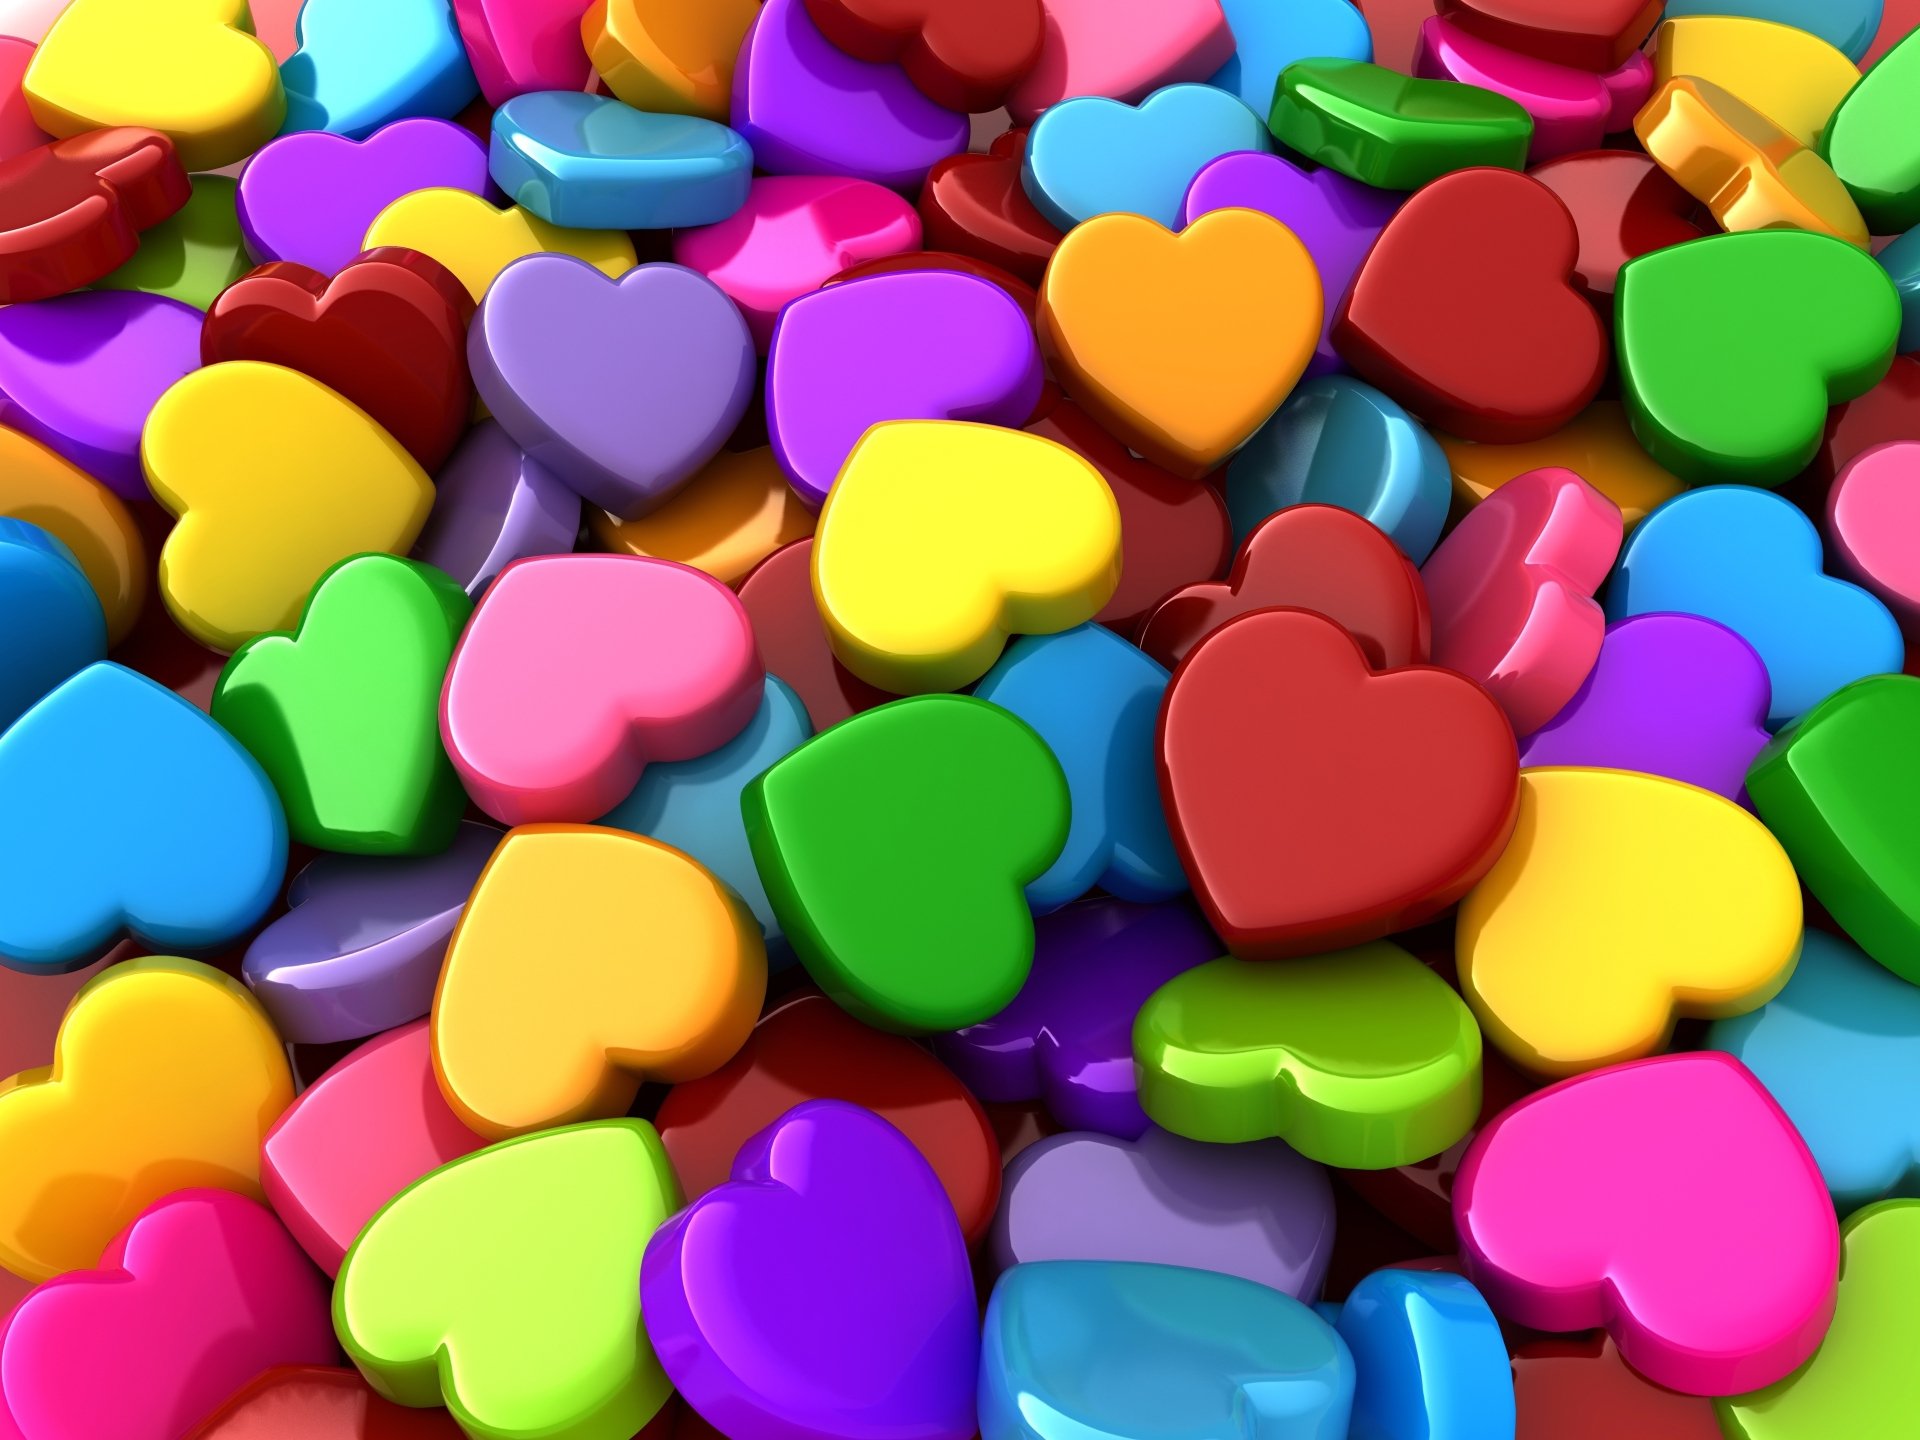 Vibrant and artistic HD desktop wallpaper featuring a colorful heart design.